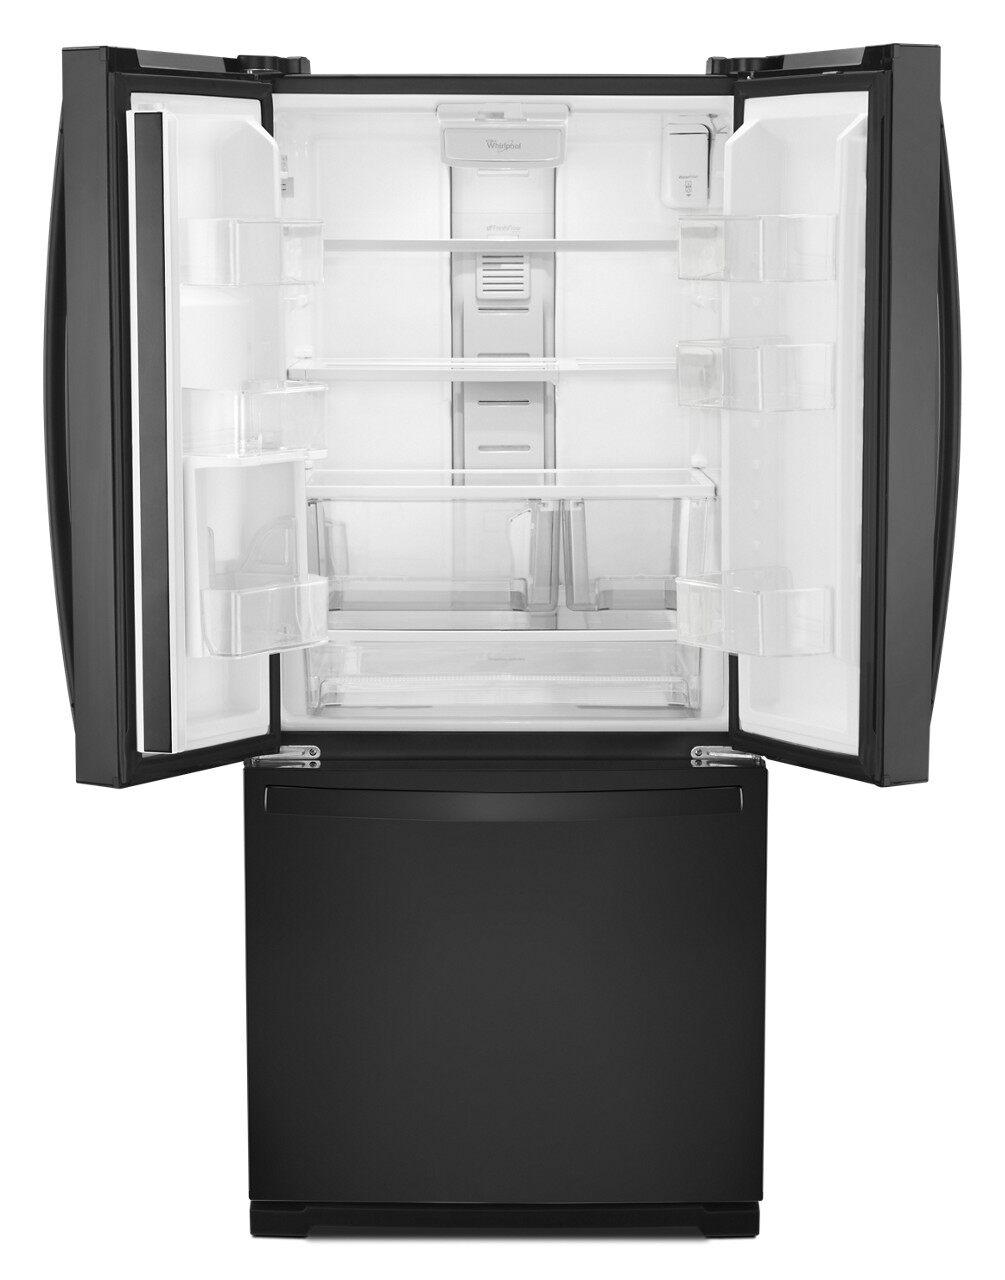 Whirlpool - 30 Inch 19.7 cu. ft French Door Refrigerator in Black - WRF560SEHB